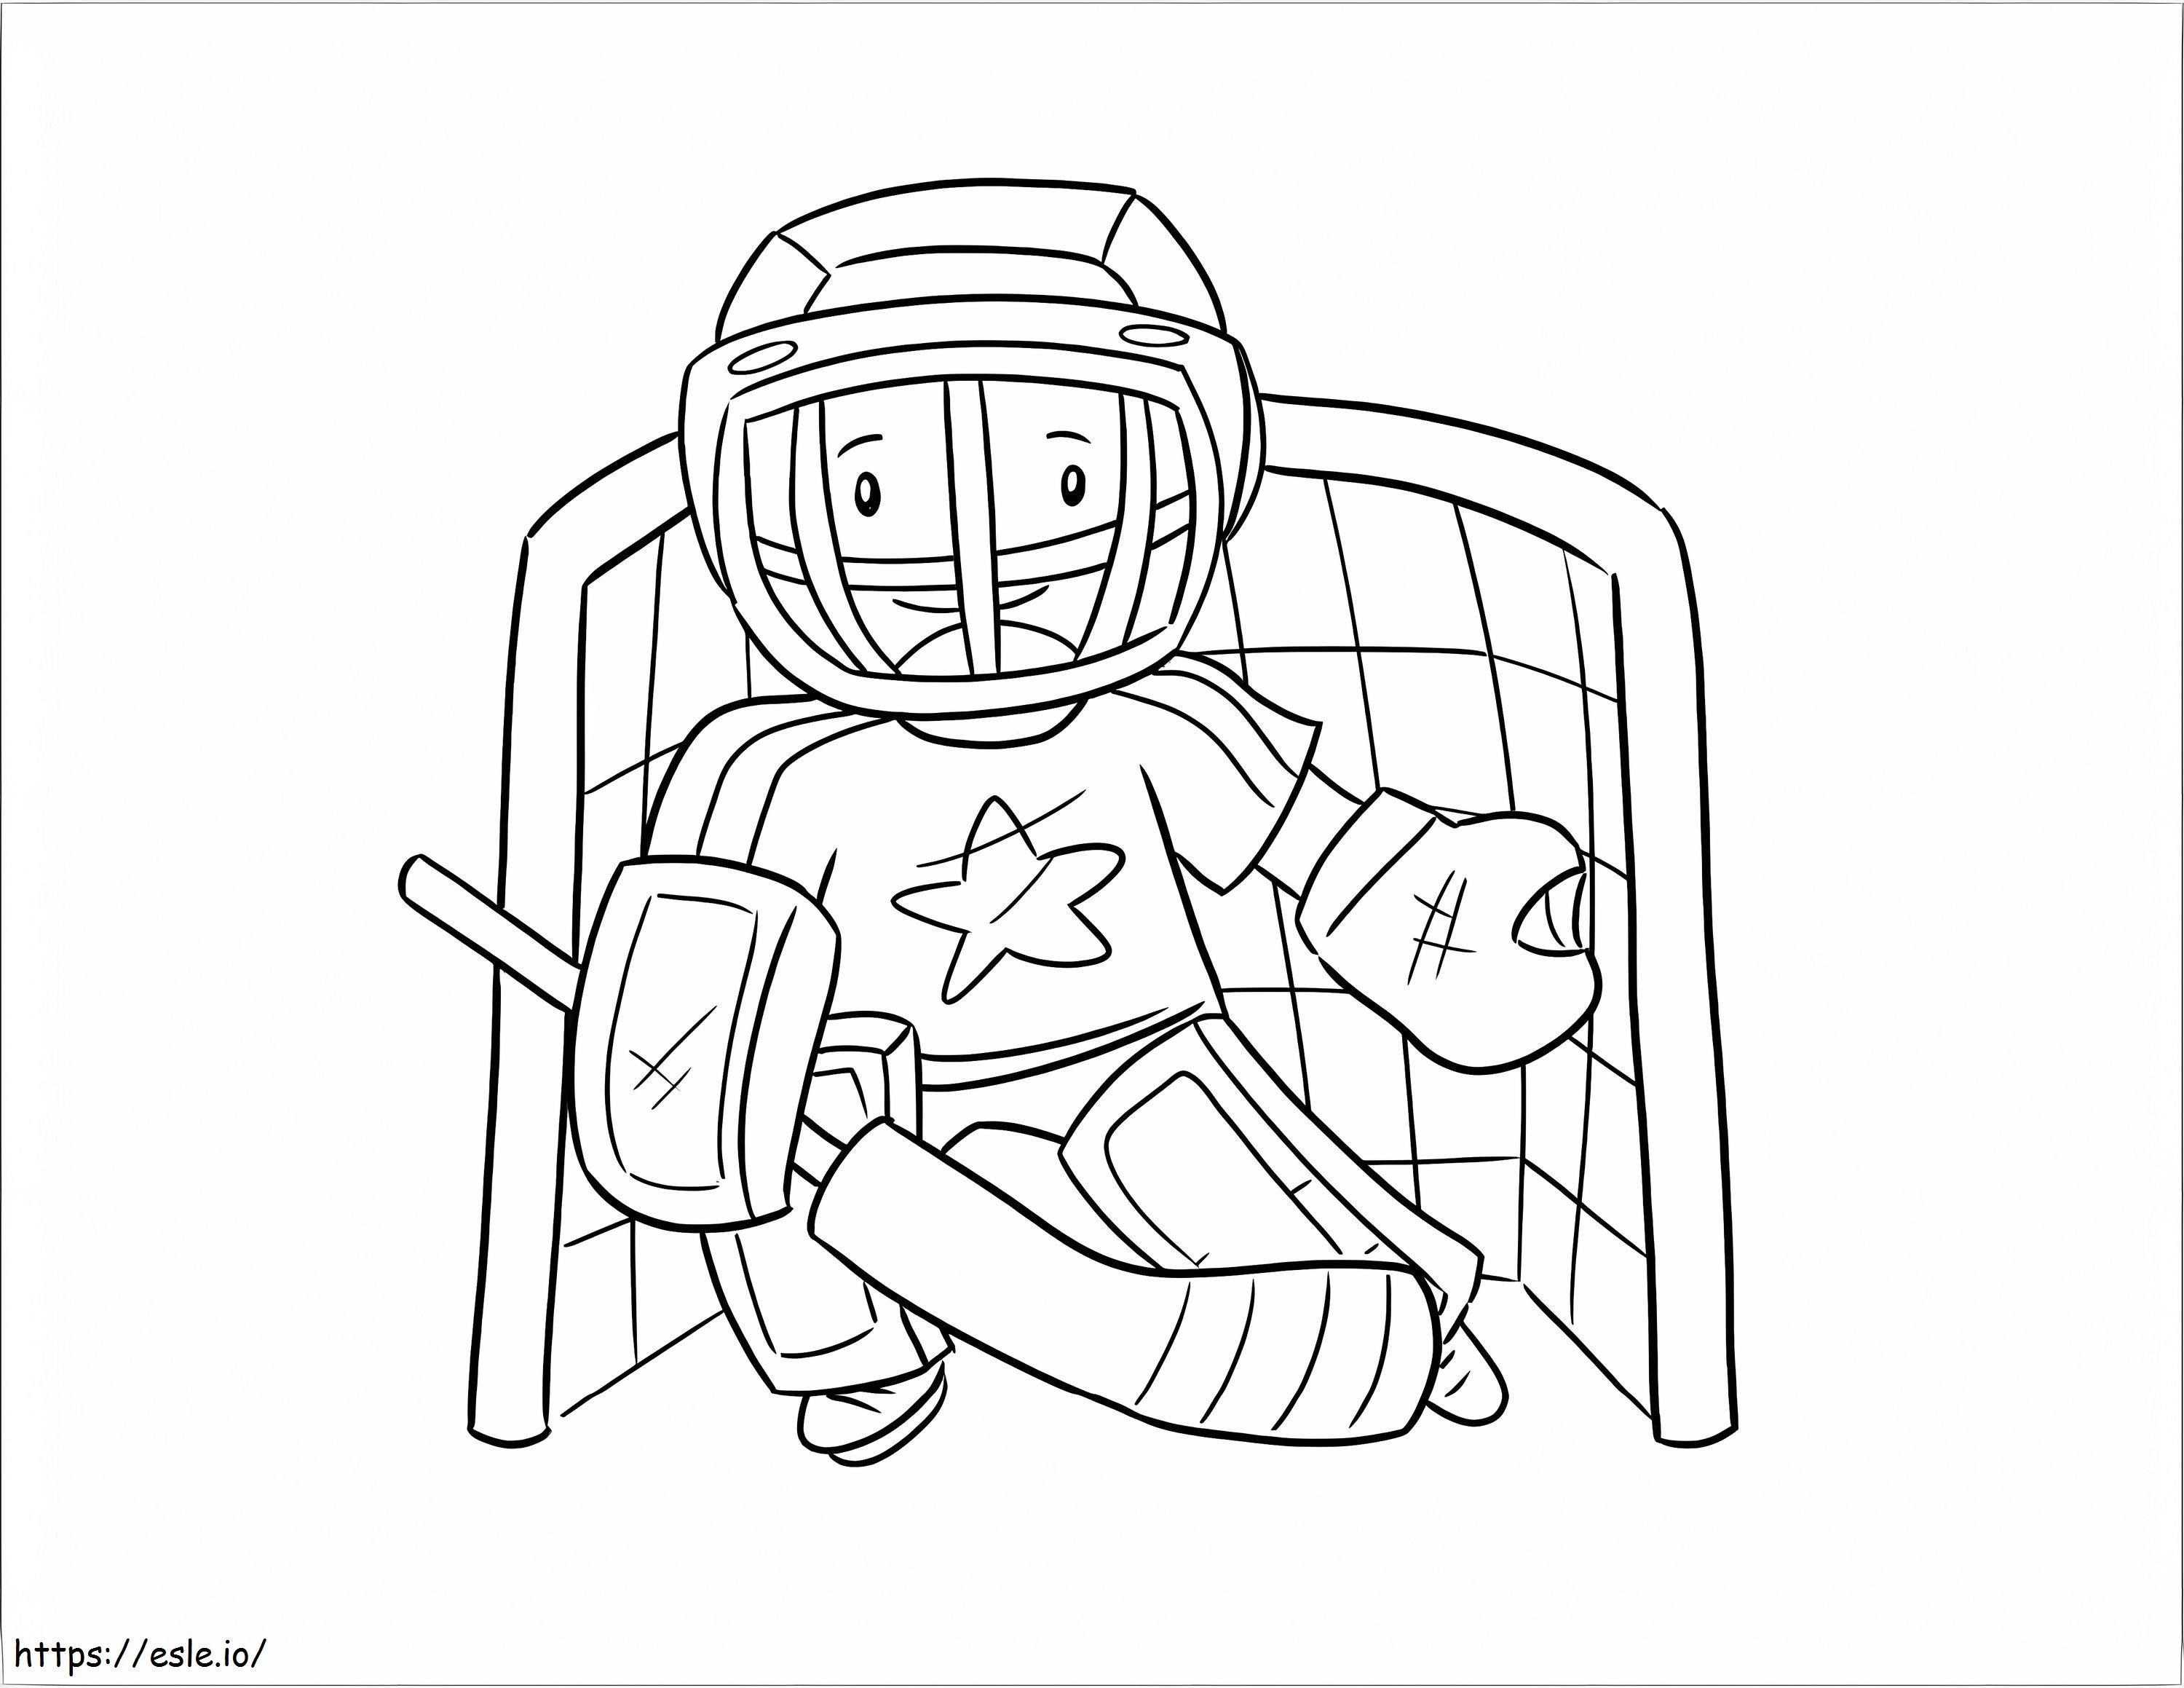 Smiling Man Playing Hockey coloring page